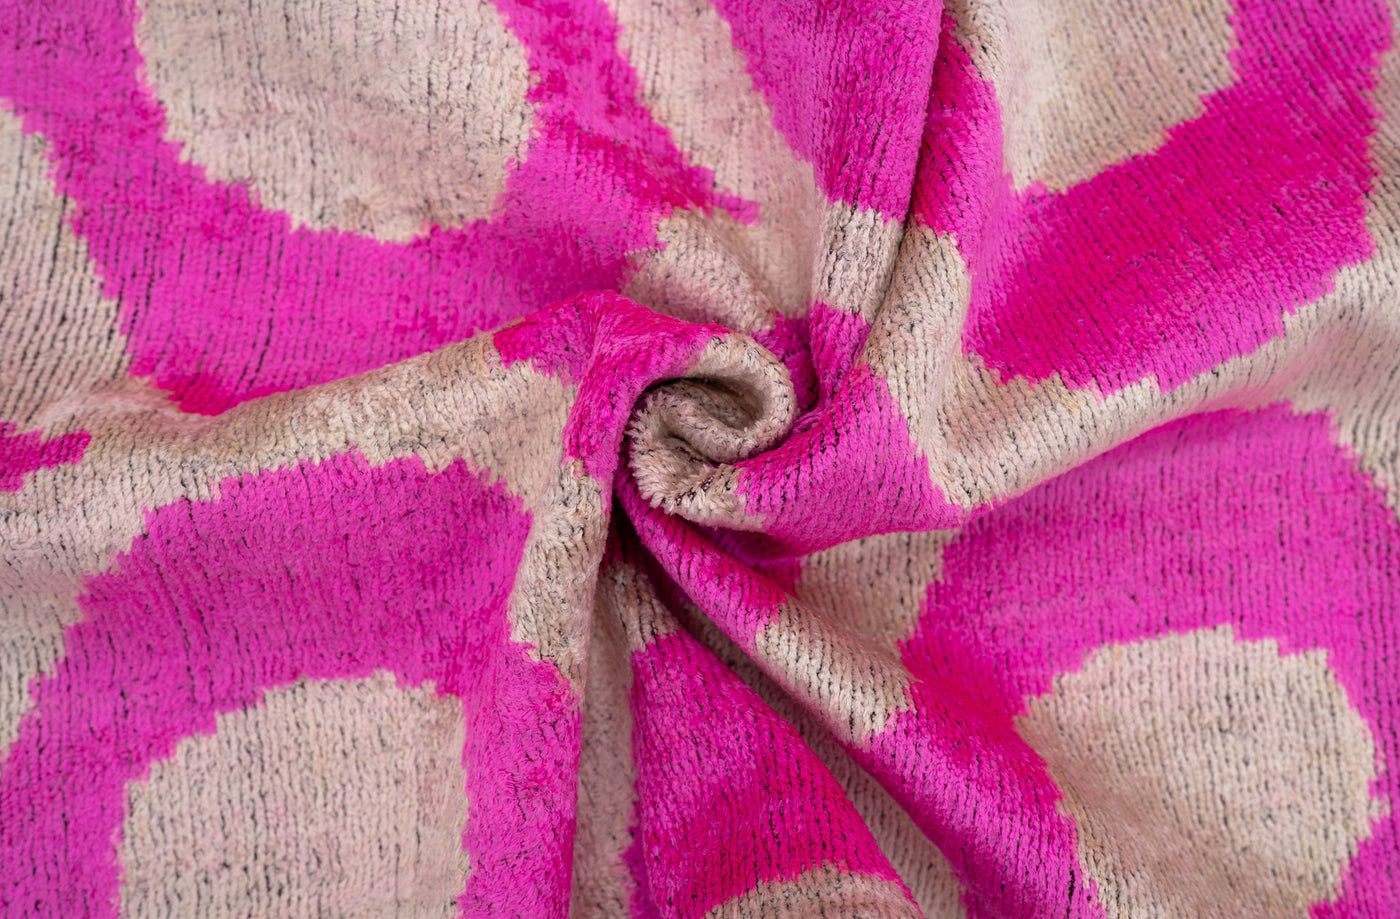 Canvello Vibrant 16x24 in Pink Geometric Trellis Throw Pillow - Modern Fuchsia and White Plush Cushion for Home Décor